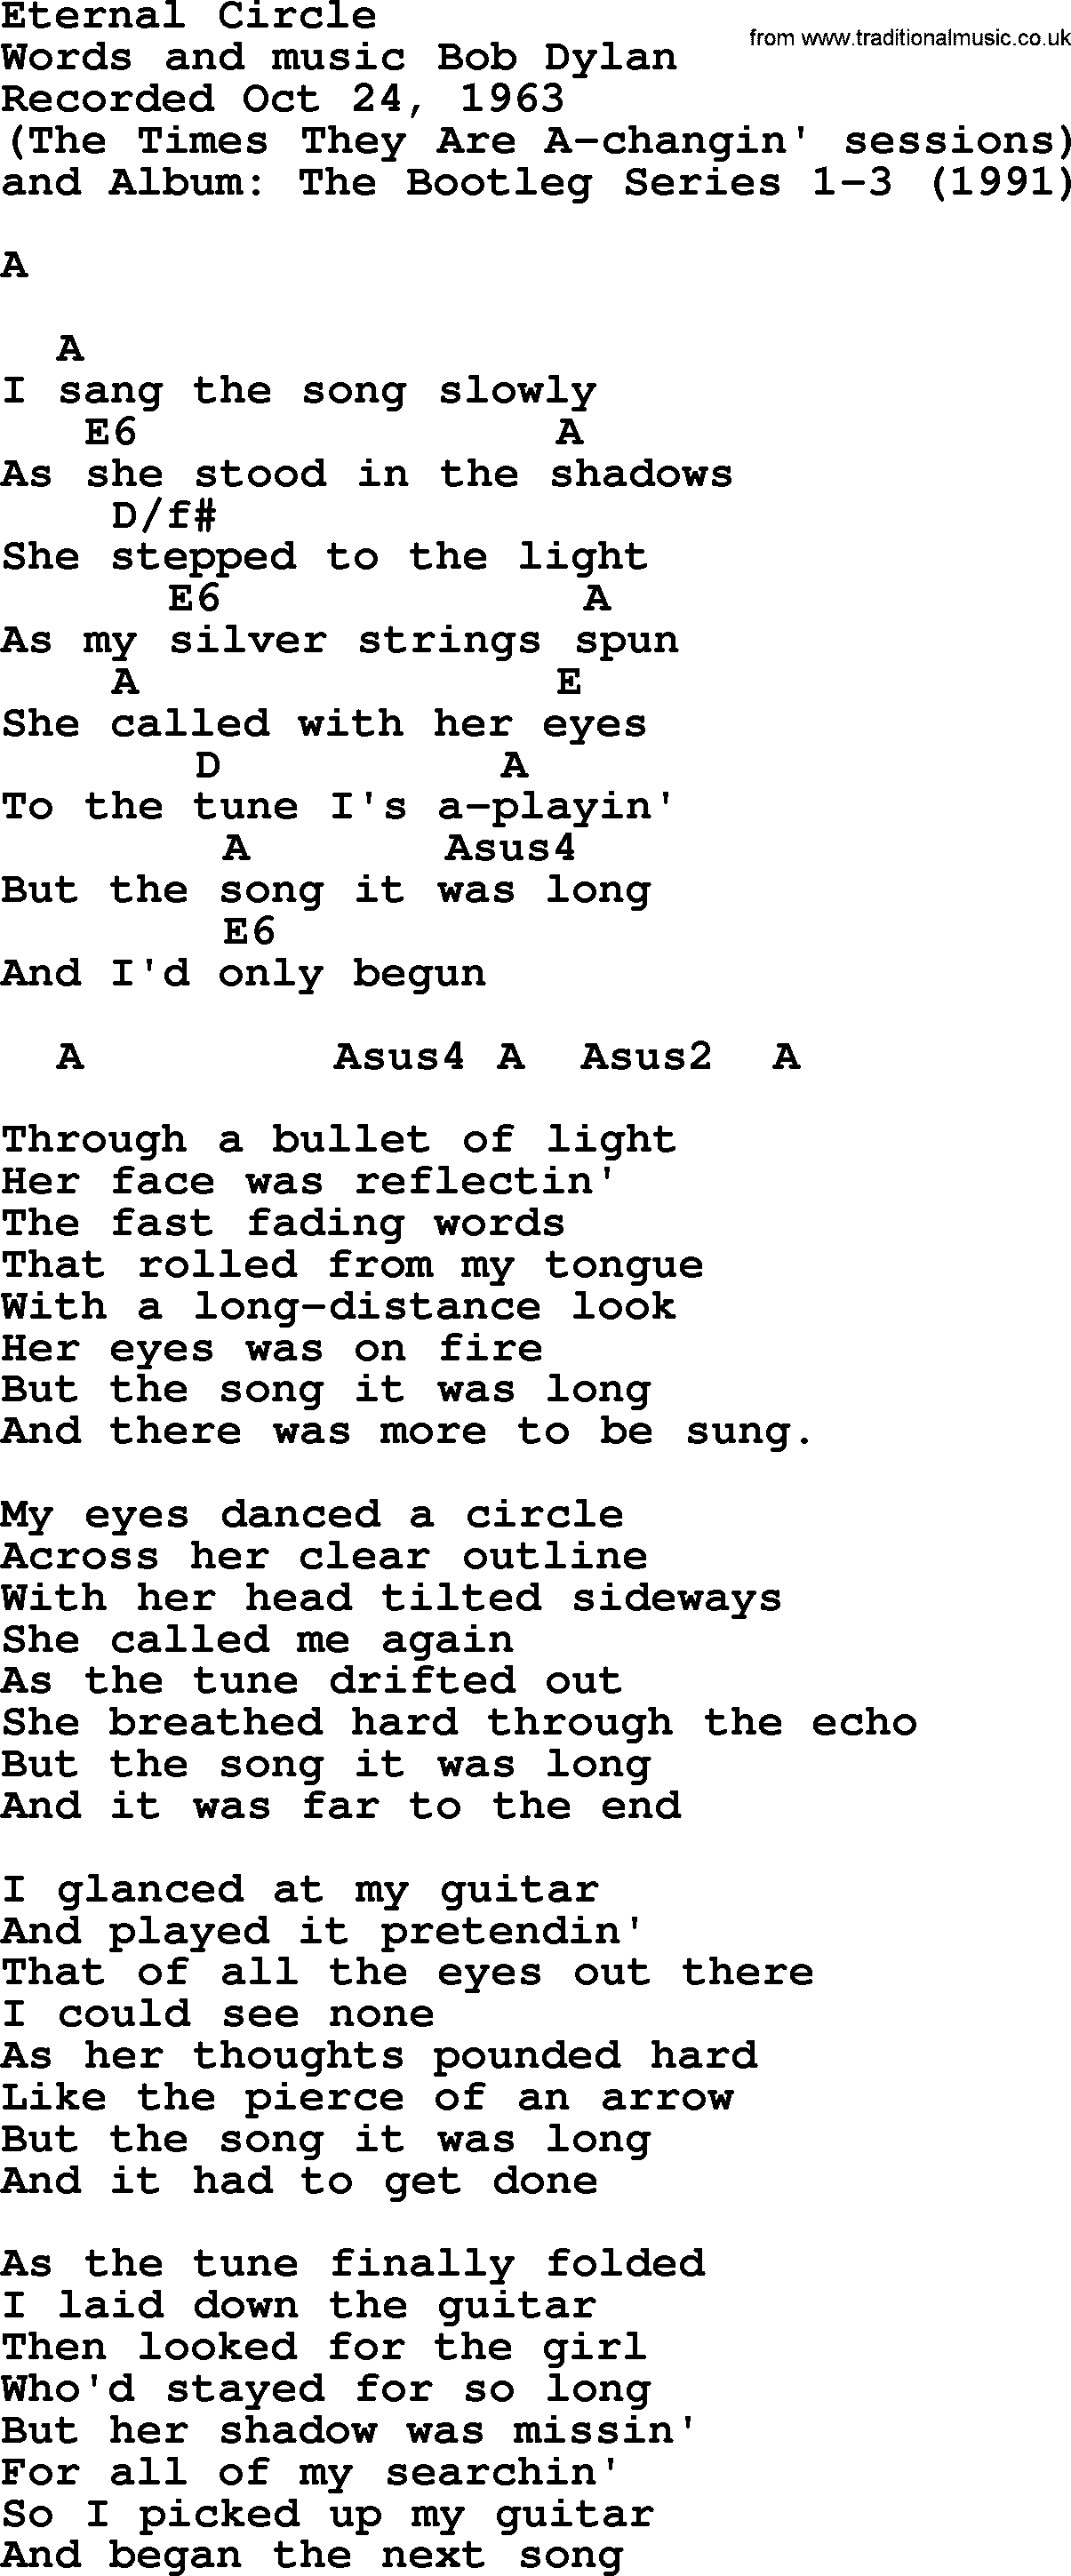 Bob Dylan song, lyrics with chords - Eternal Circle